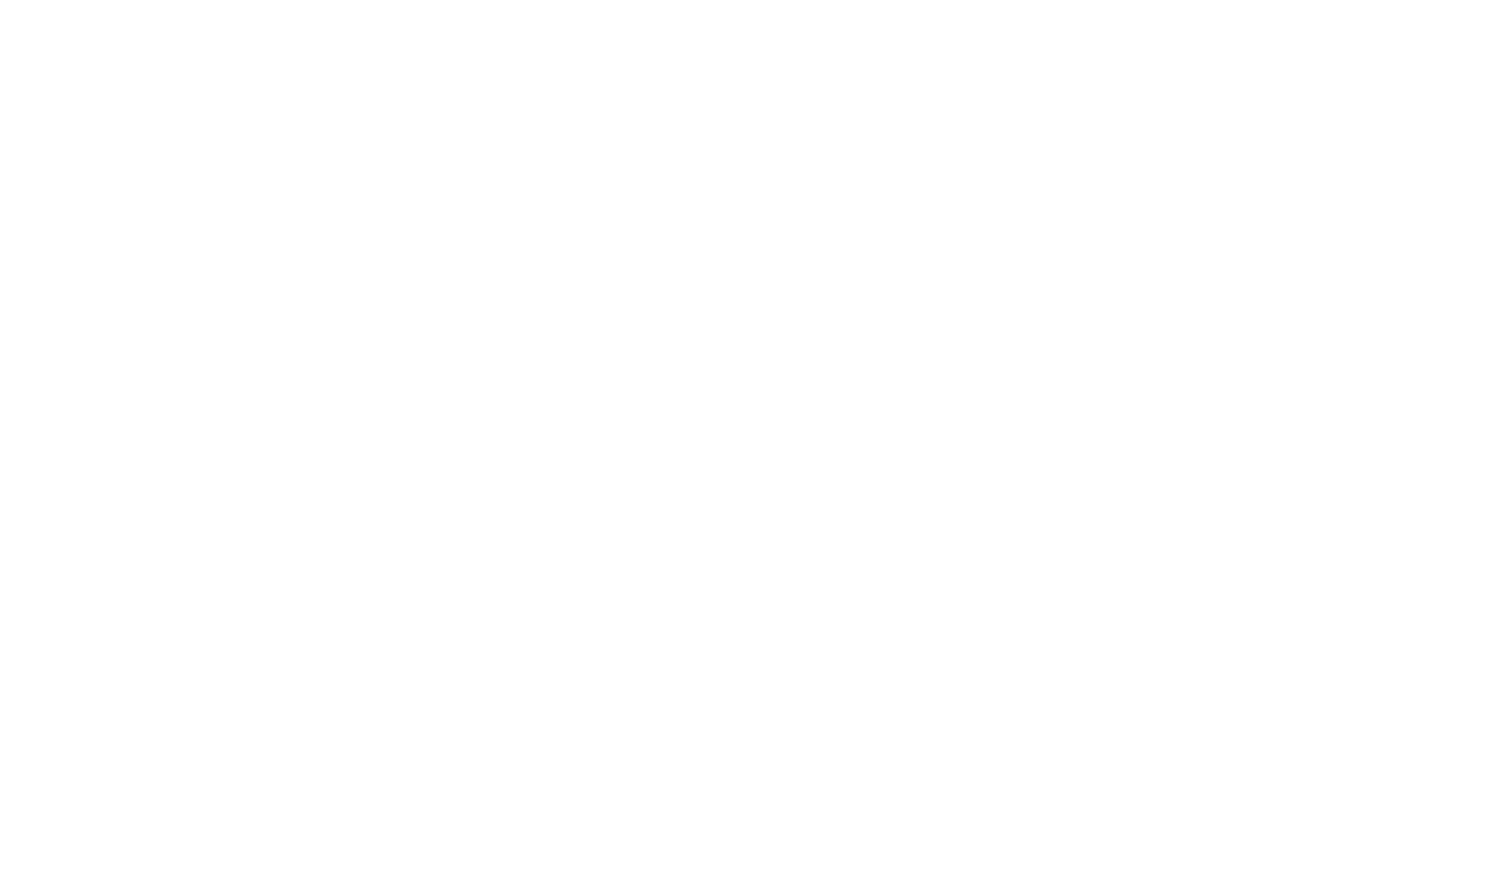 Telehope